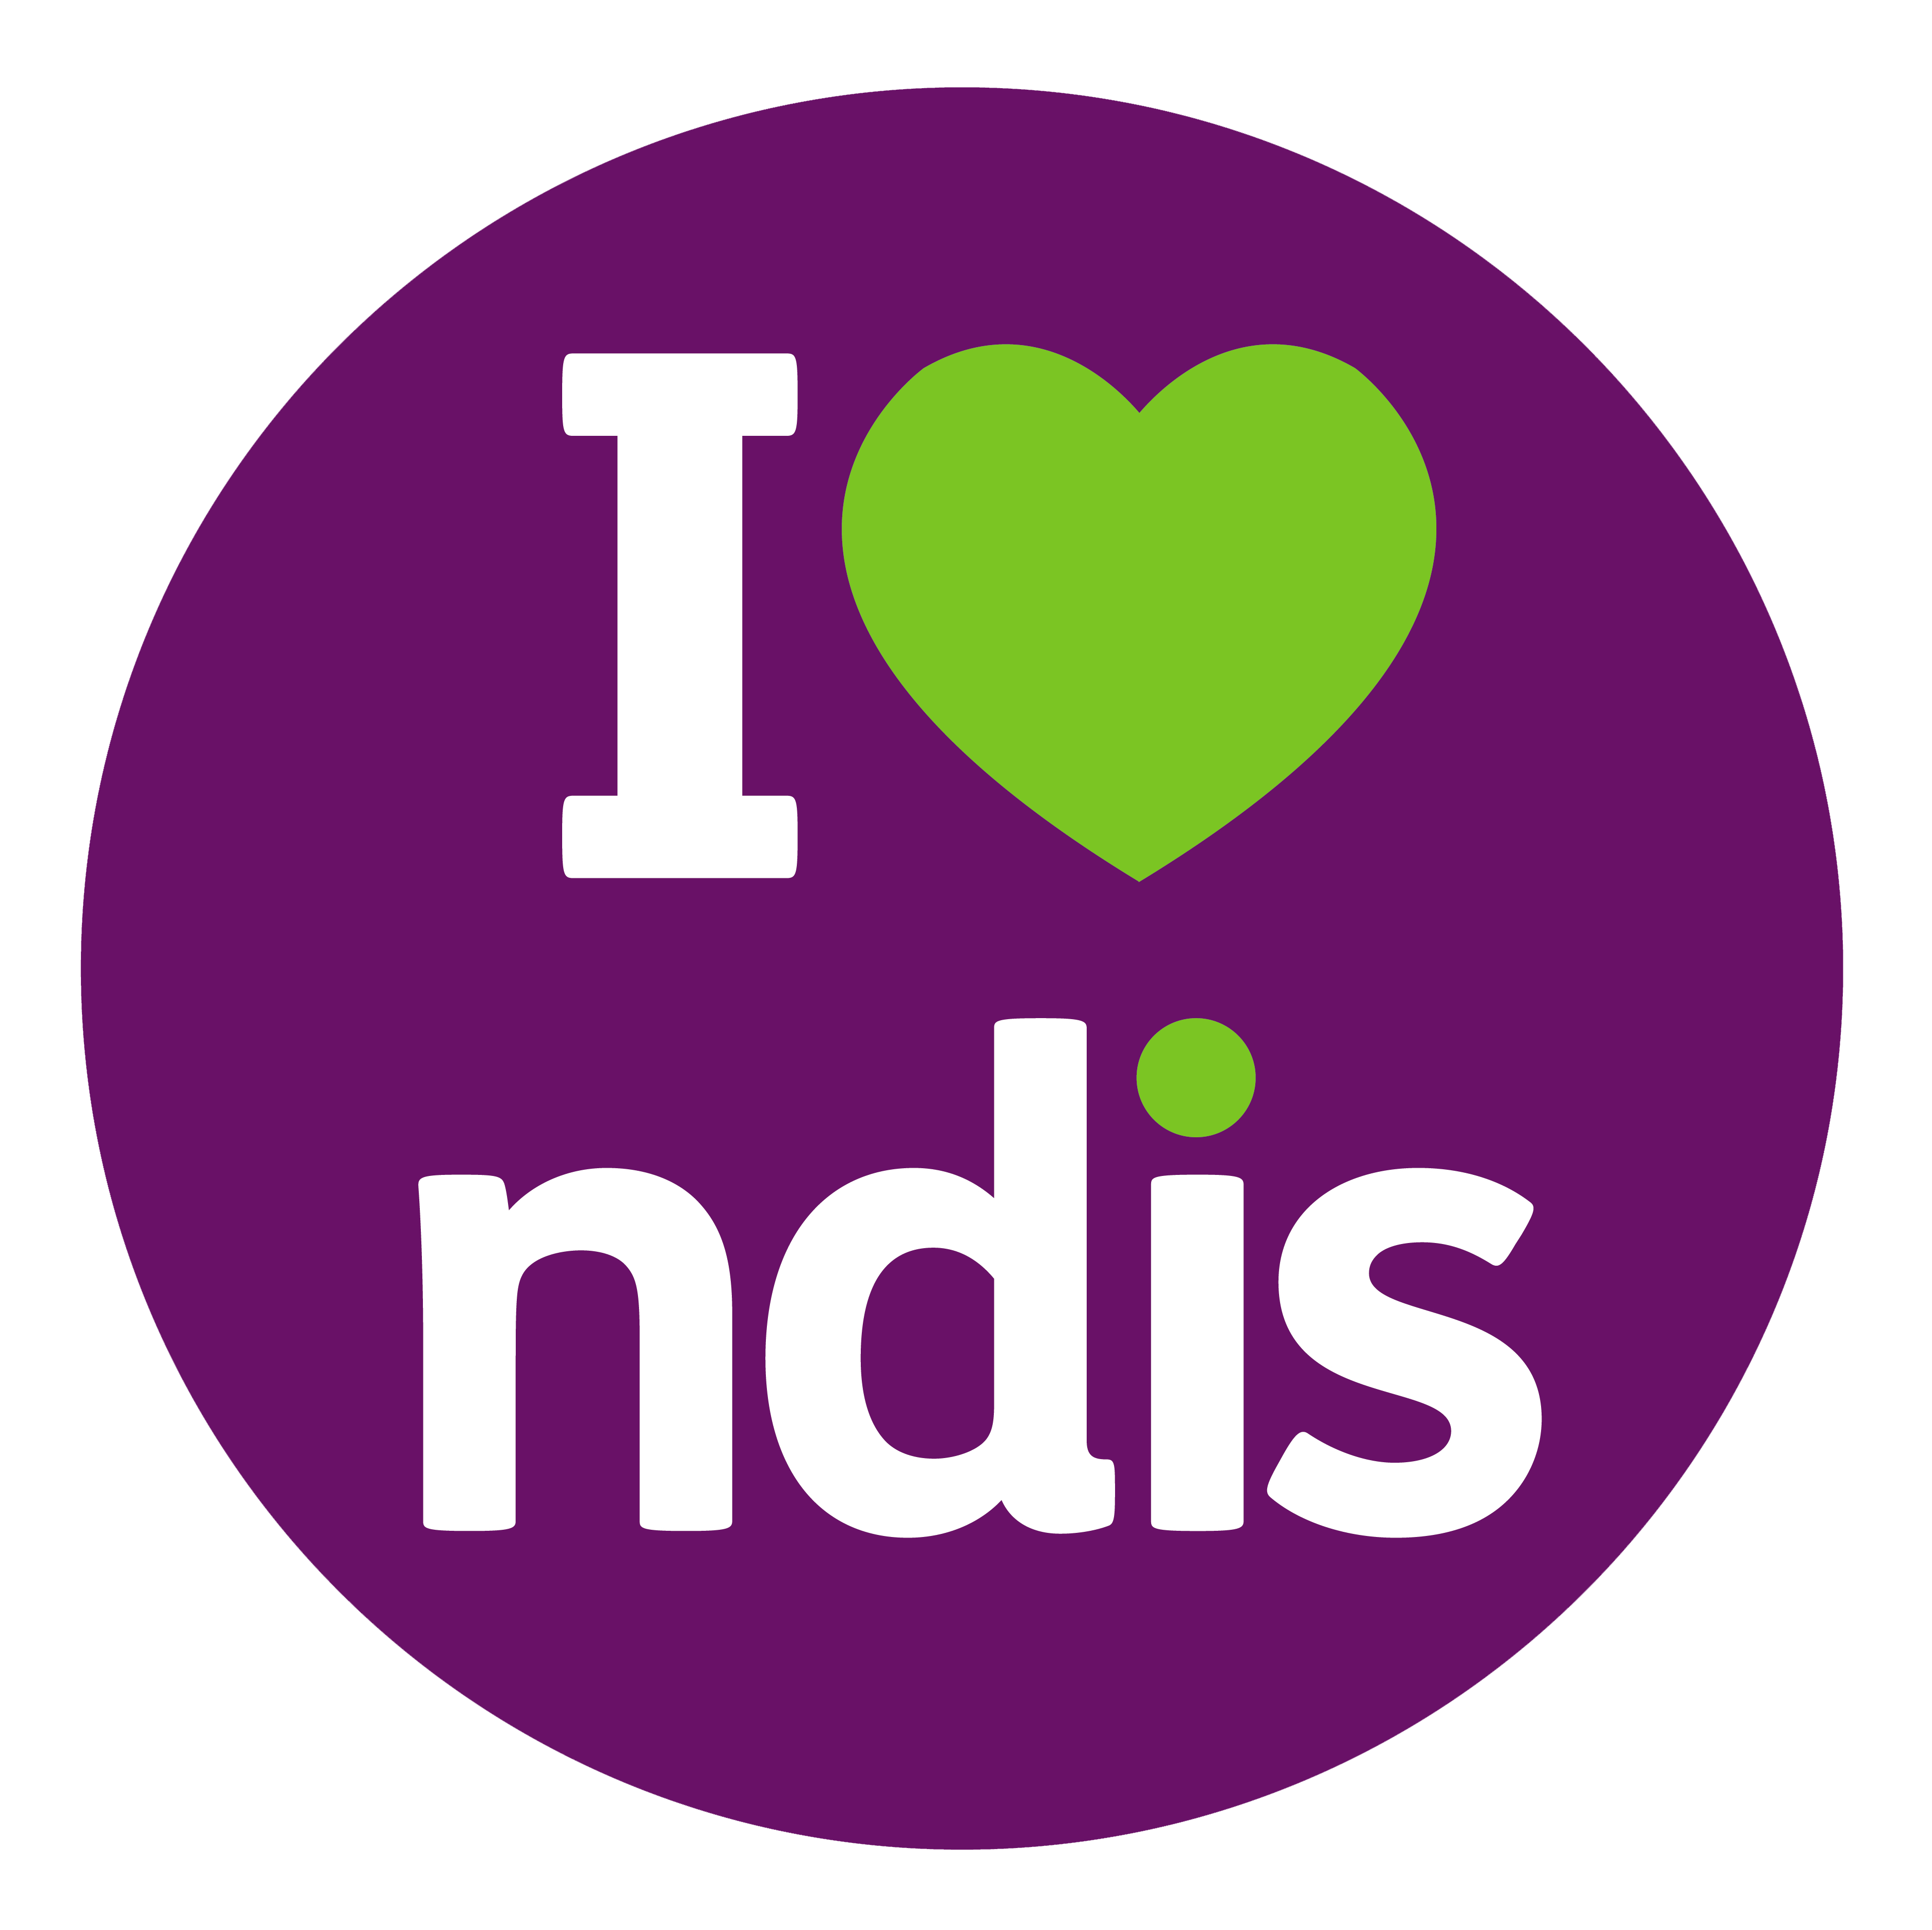 National Disability Insurance Agency (NDIA)